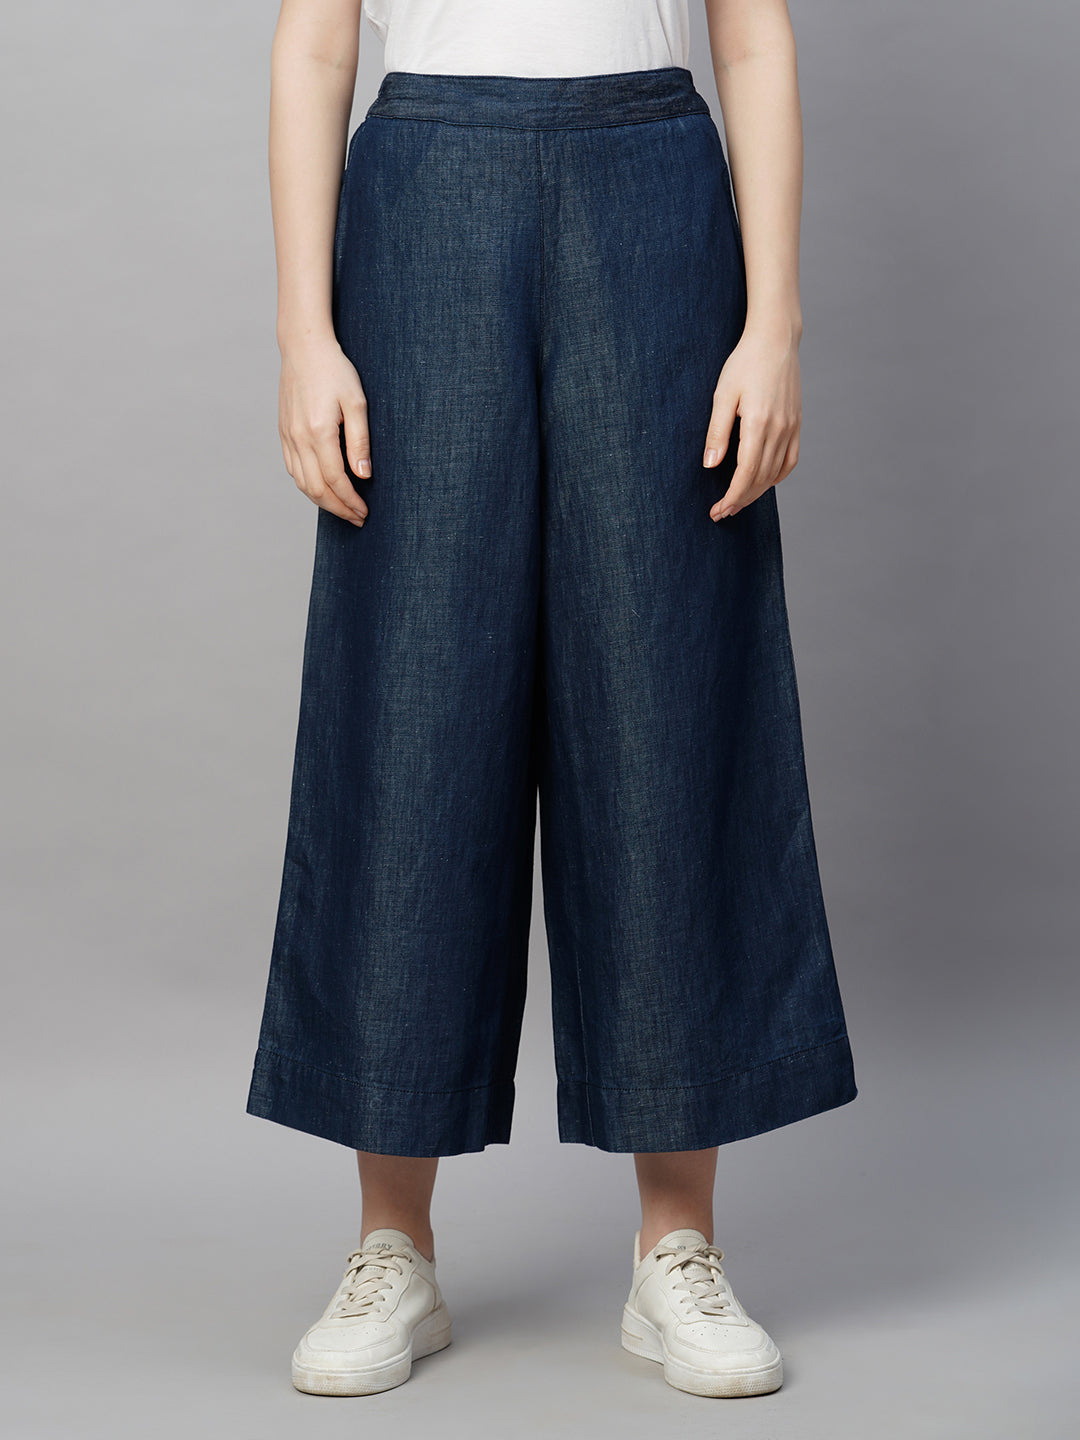 New Standard Jeans | Japanese Raw Selvedge Indigo Denim | A.P.C.  Ready-to-Wear